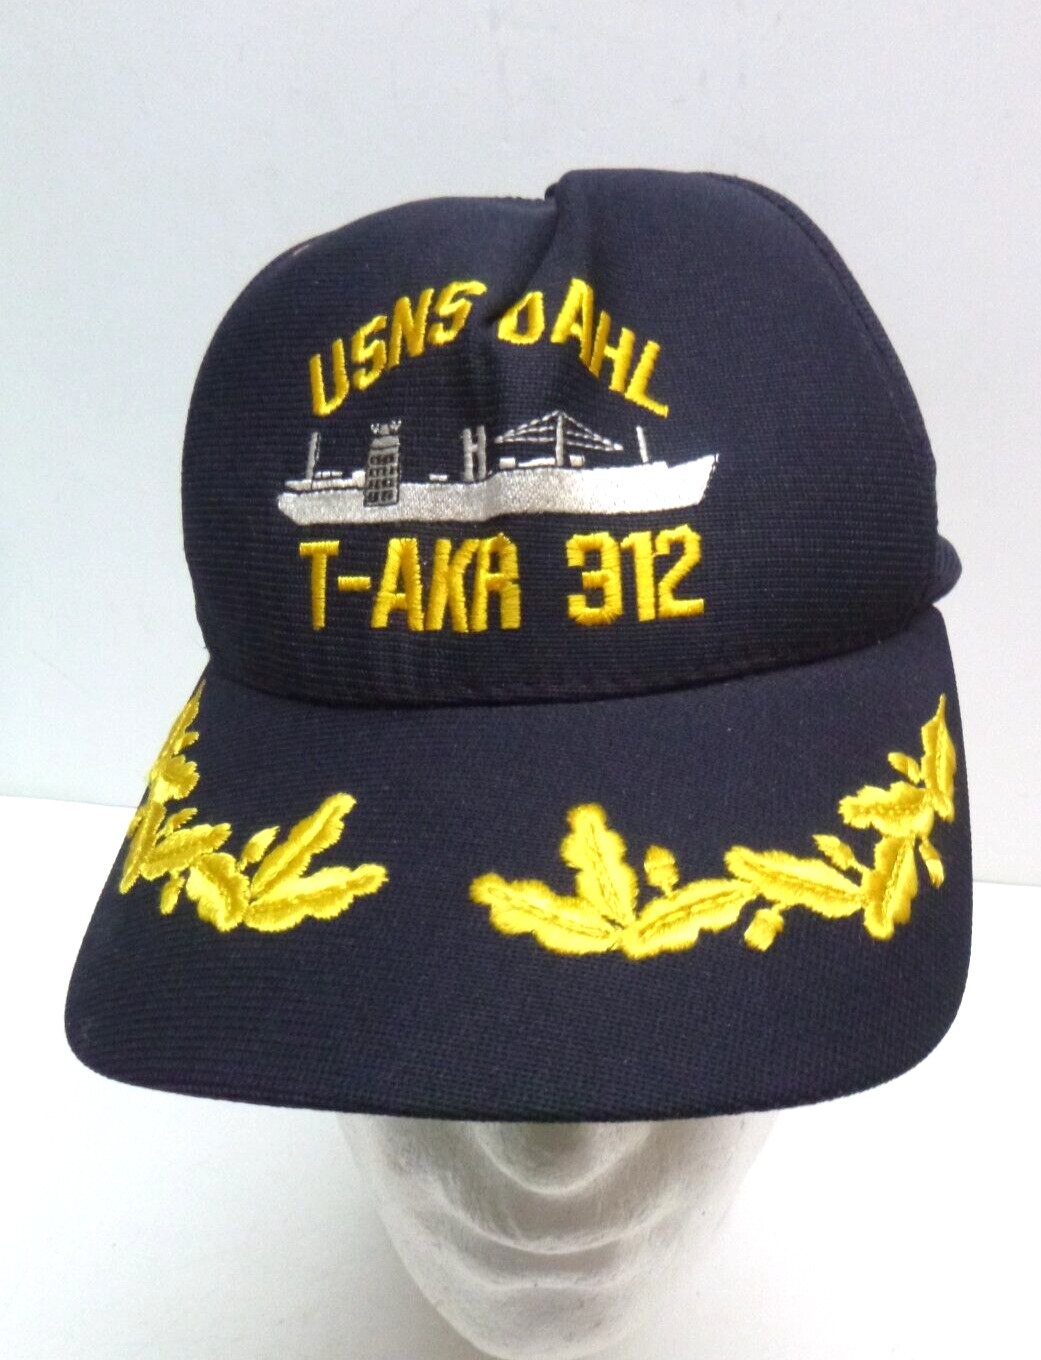 USNS Dahl T-AKA 312 snapback hat Cap